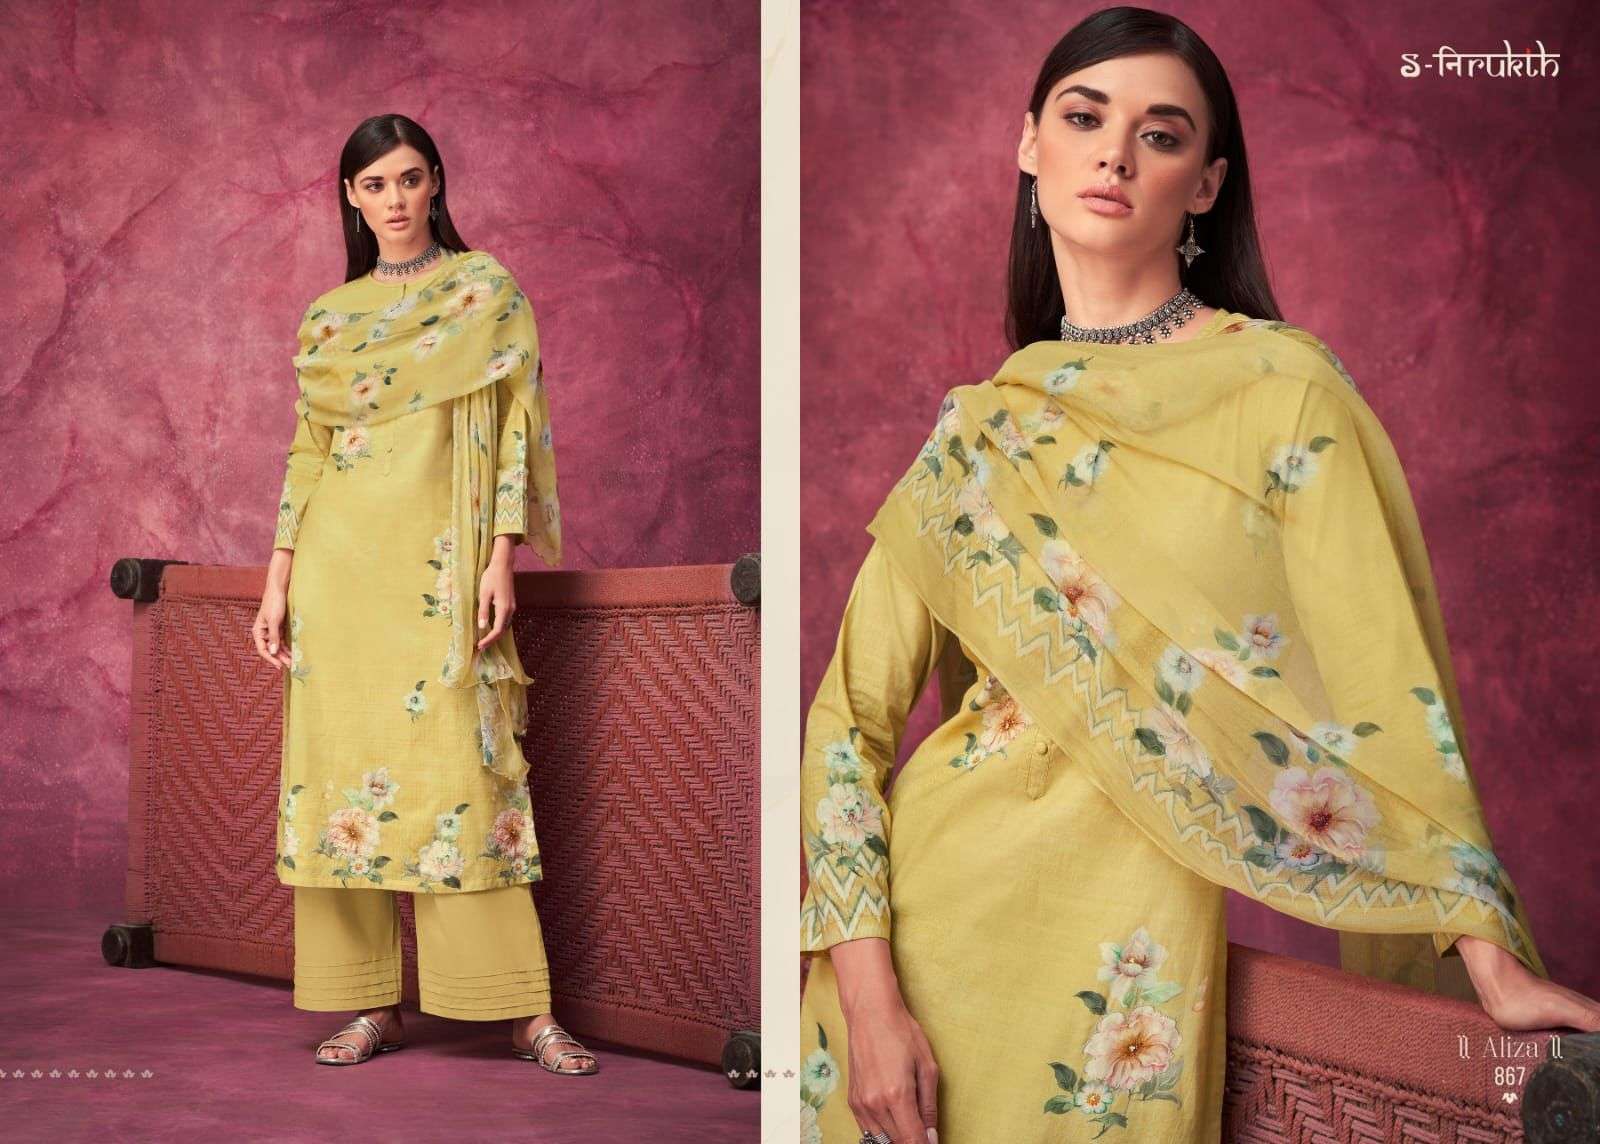 sahiba presents aliza cotton printed designer salwar suits collection wholesale price surat